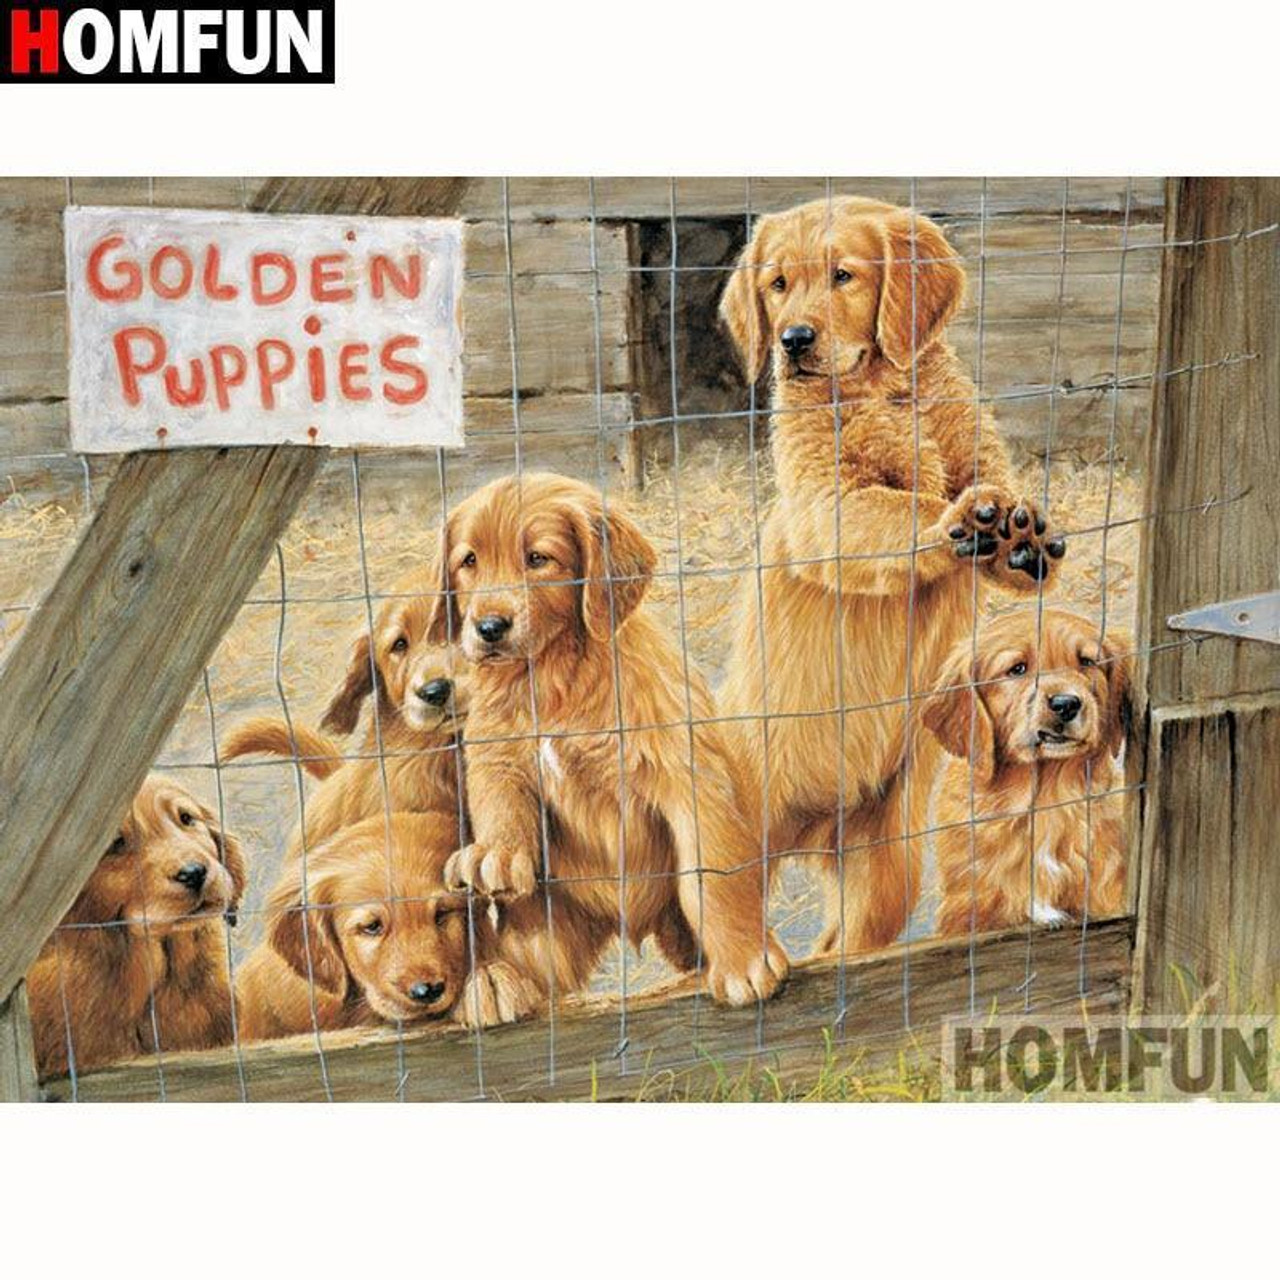 Golden Retriever Dog - Diamond Painting Kit